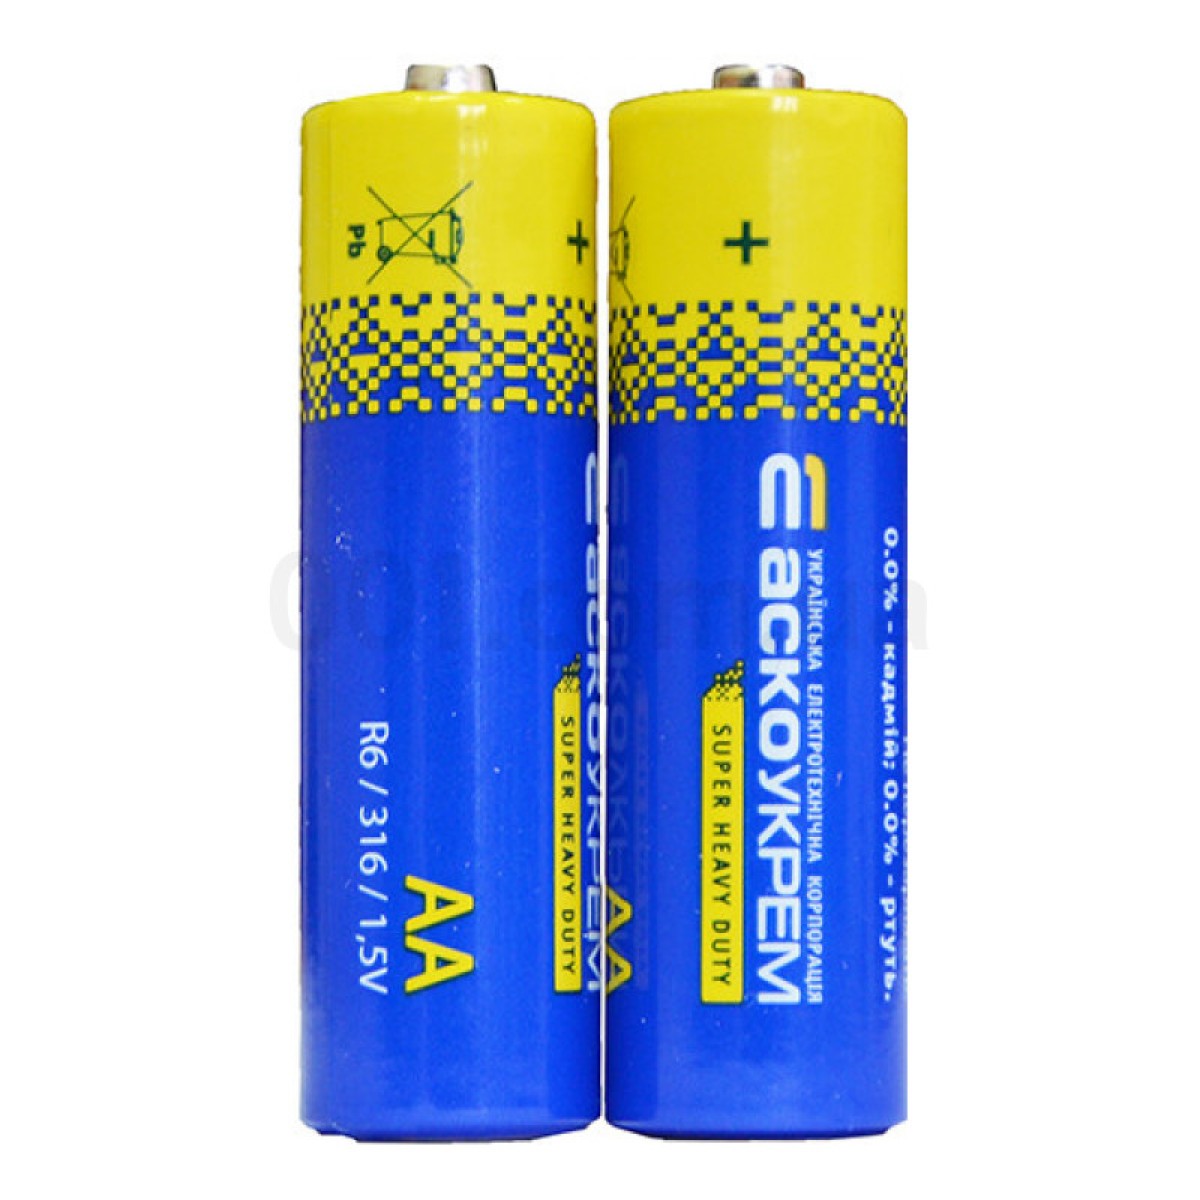 Батарейка солевая АА.R6.SP2, типоразмер AA упаковка shrink 2 шт., АСКО-УКРЕМ 256_256.jpg